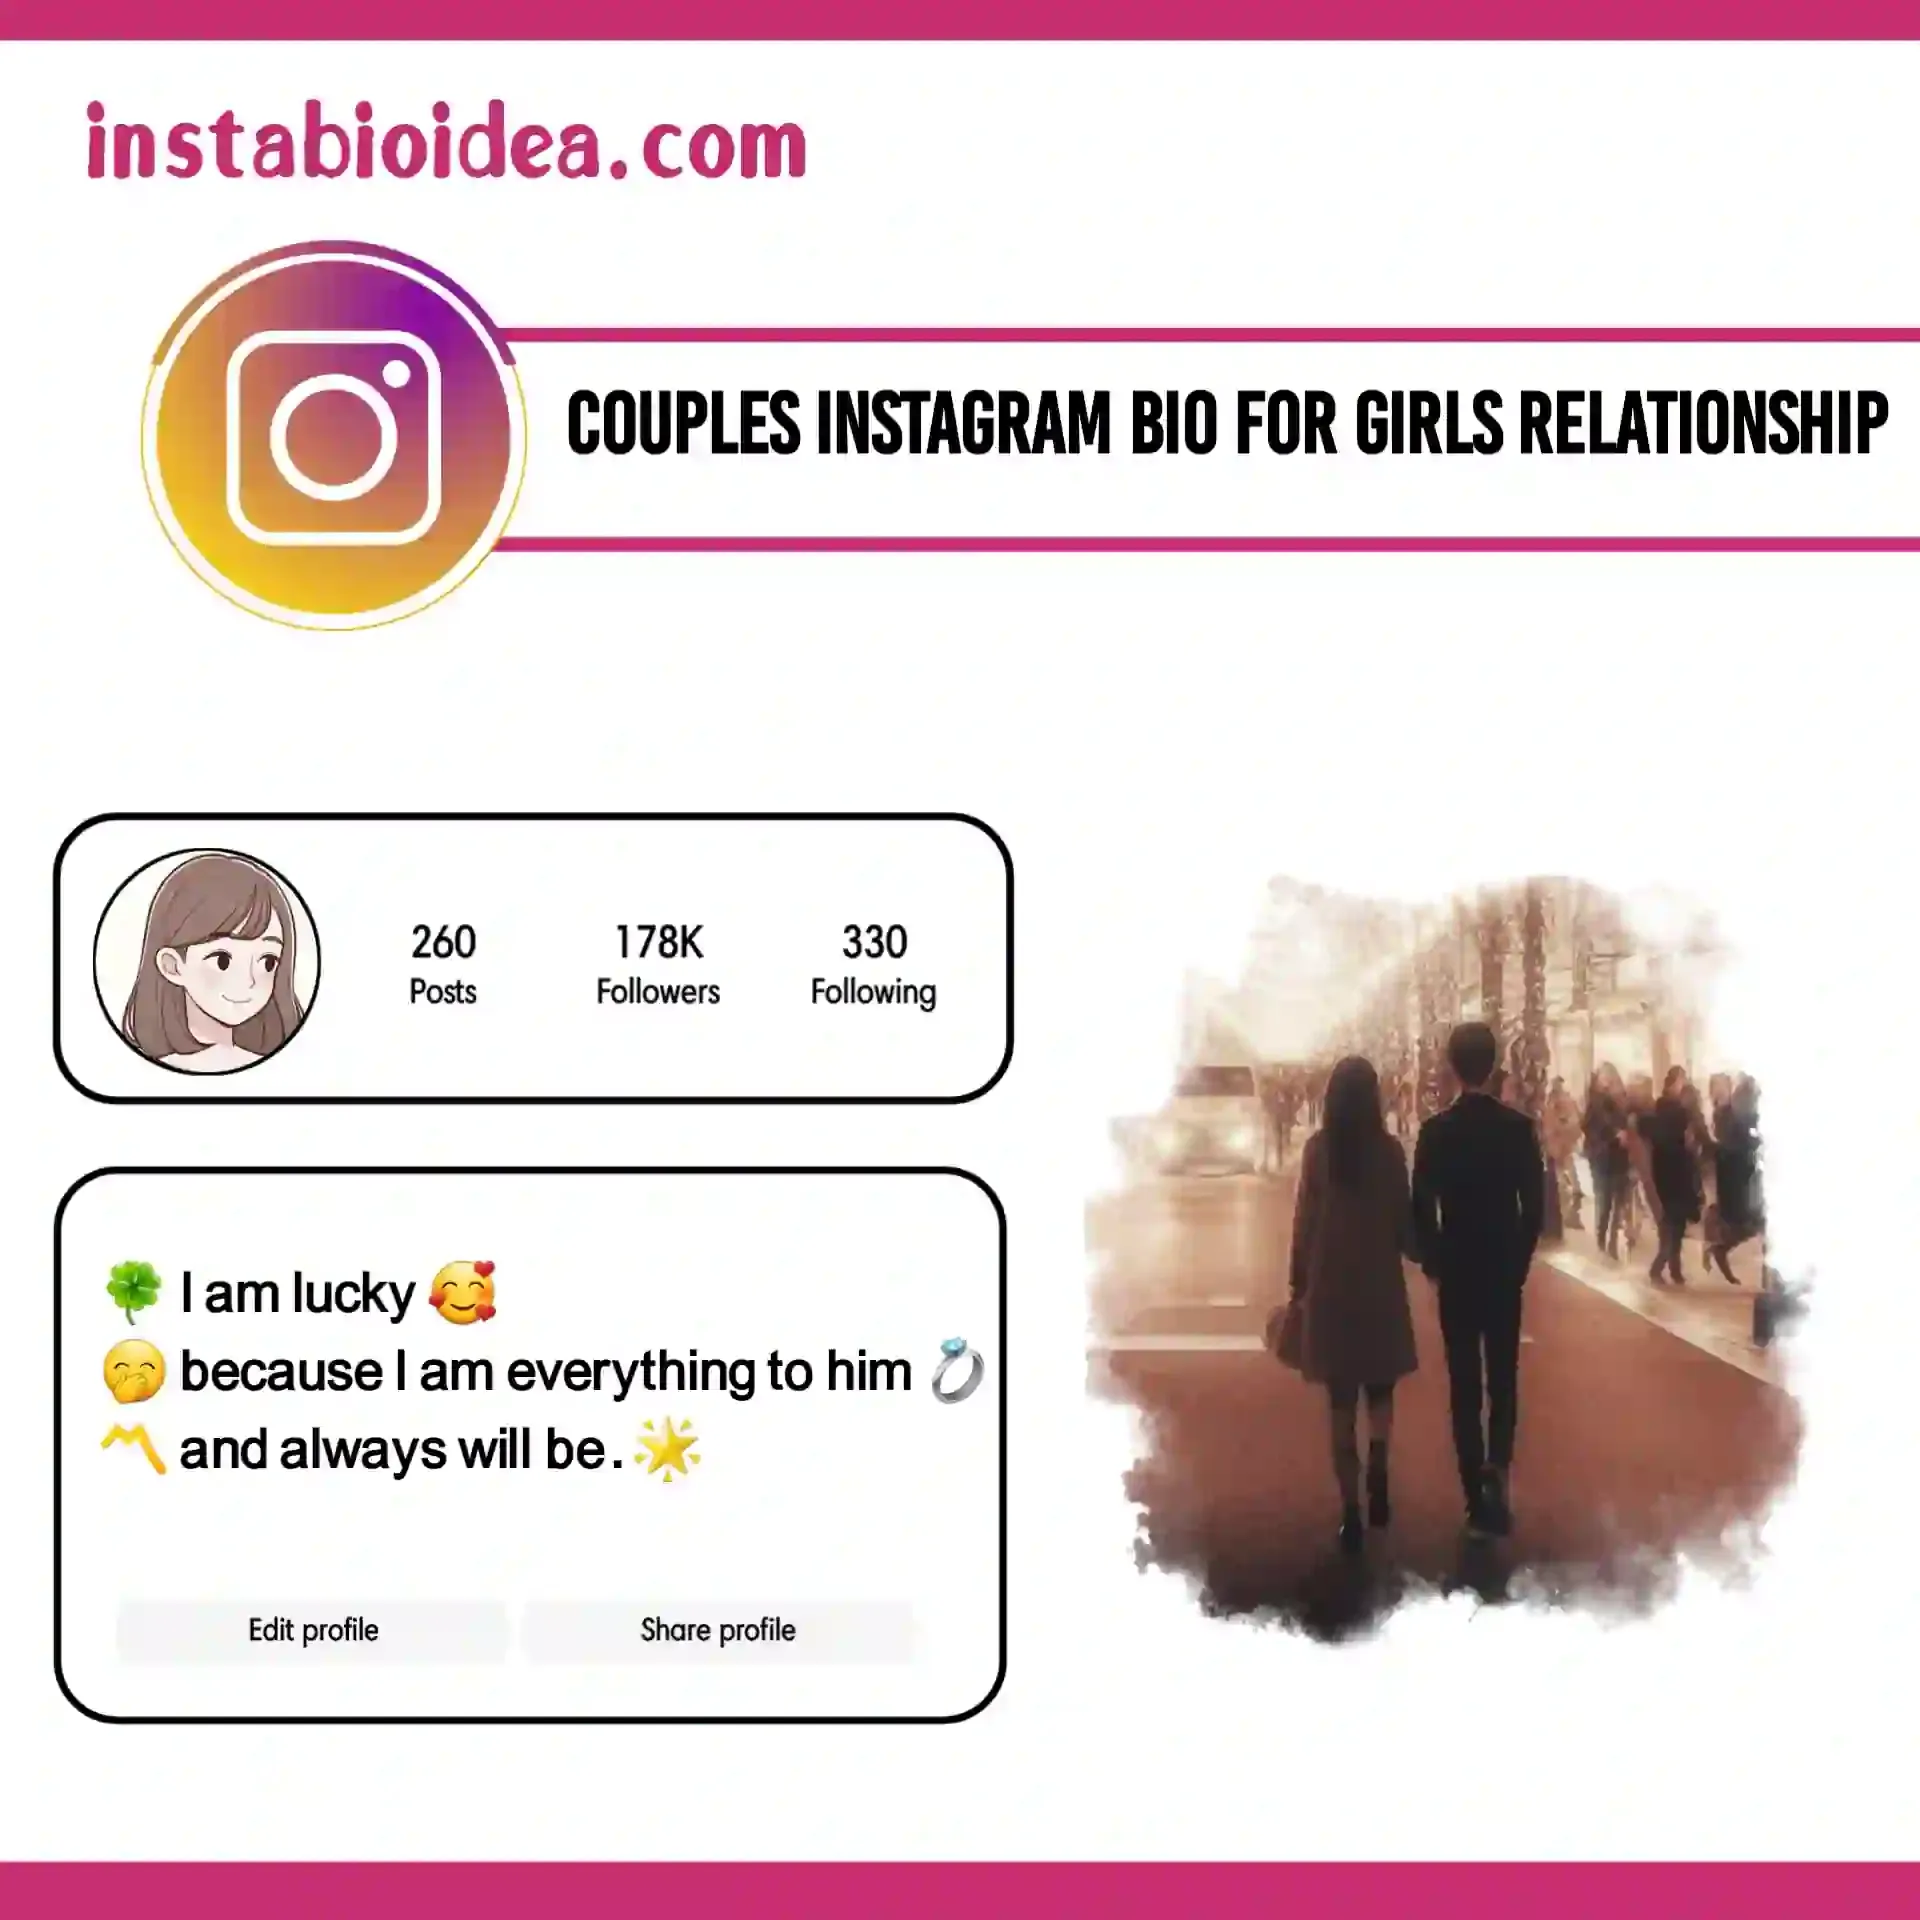 couples instagram bio for girls relationship image